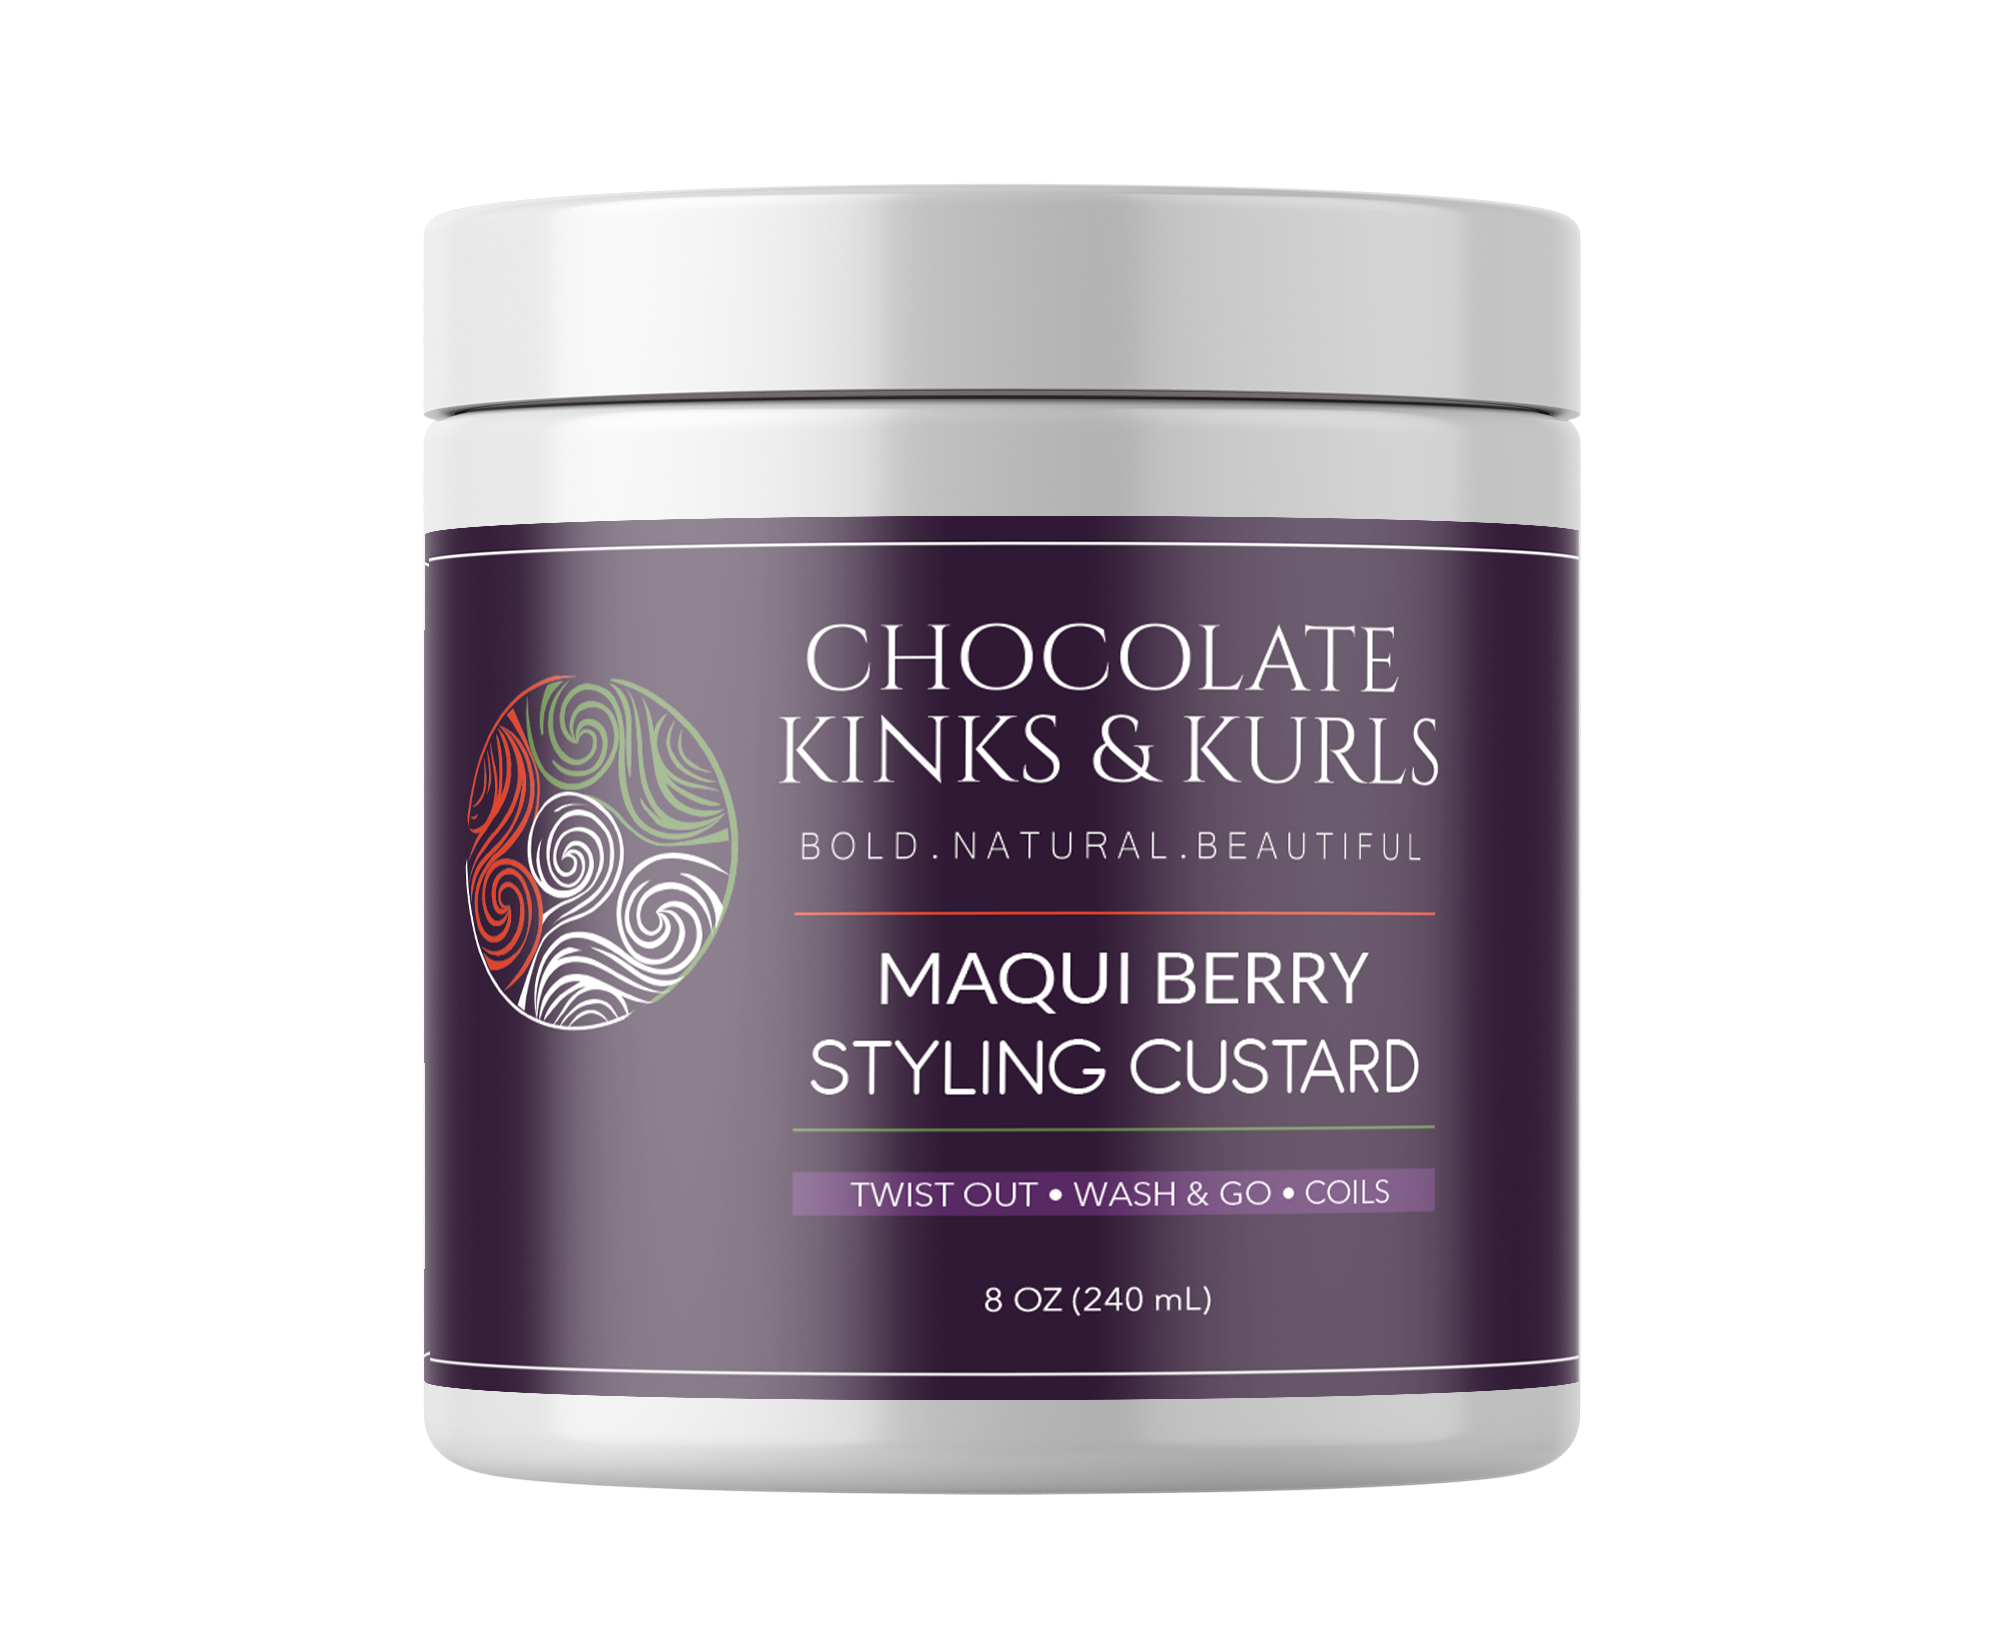 Maqui Berry Styling Custard